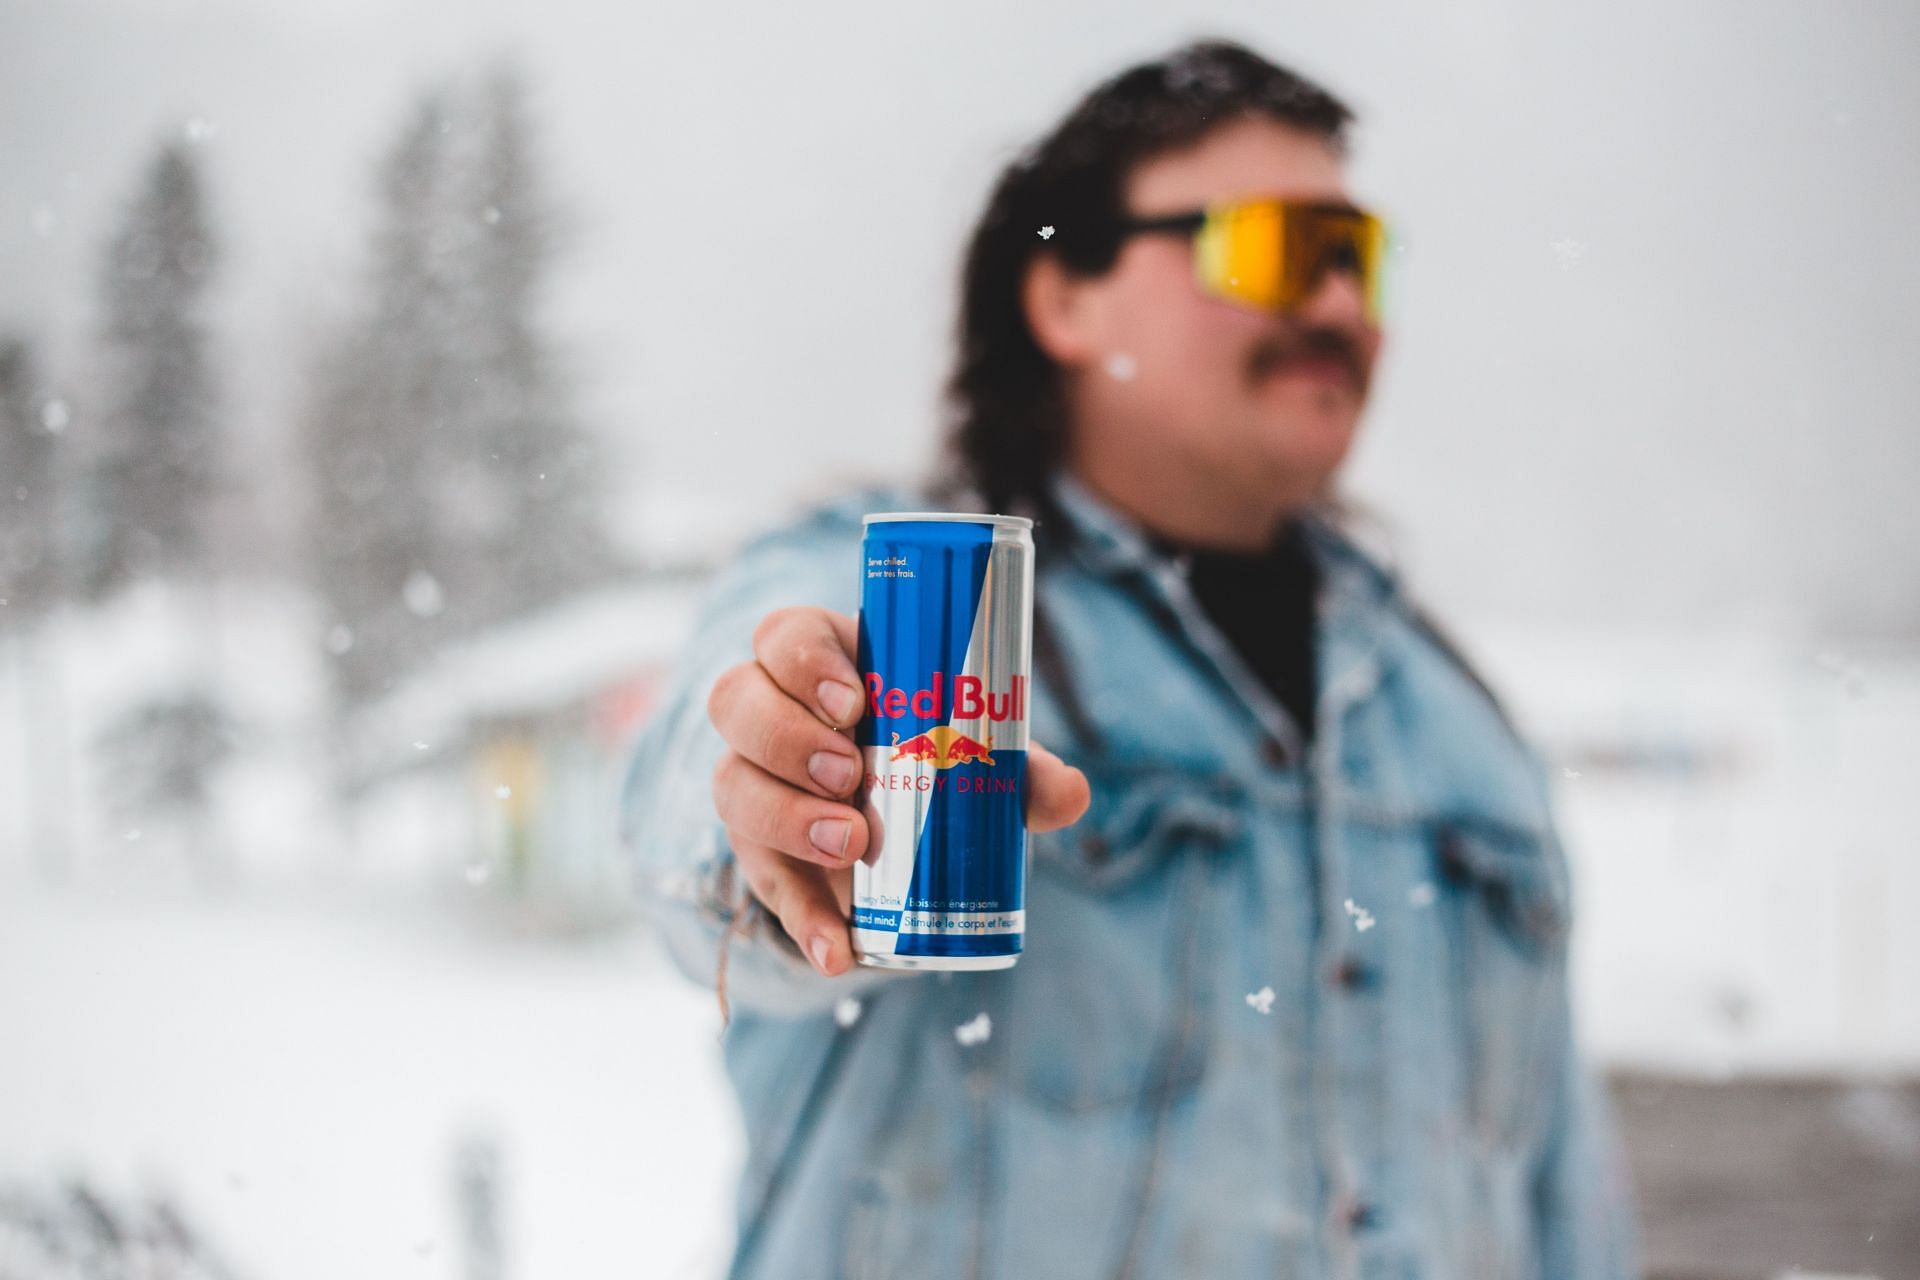 Red Bull has high caffeine. (Image via Unsplash/ Erik McLean)